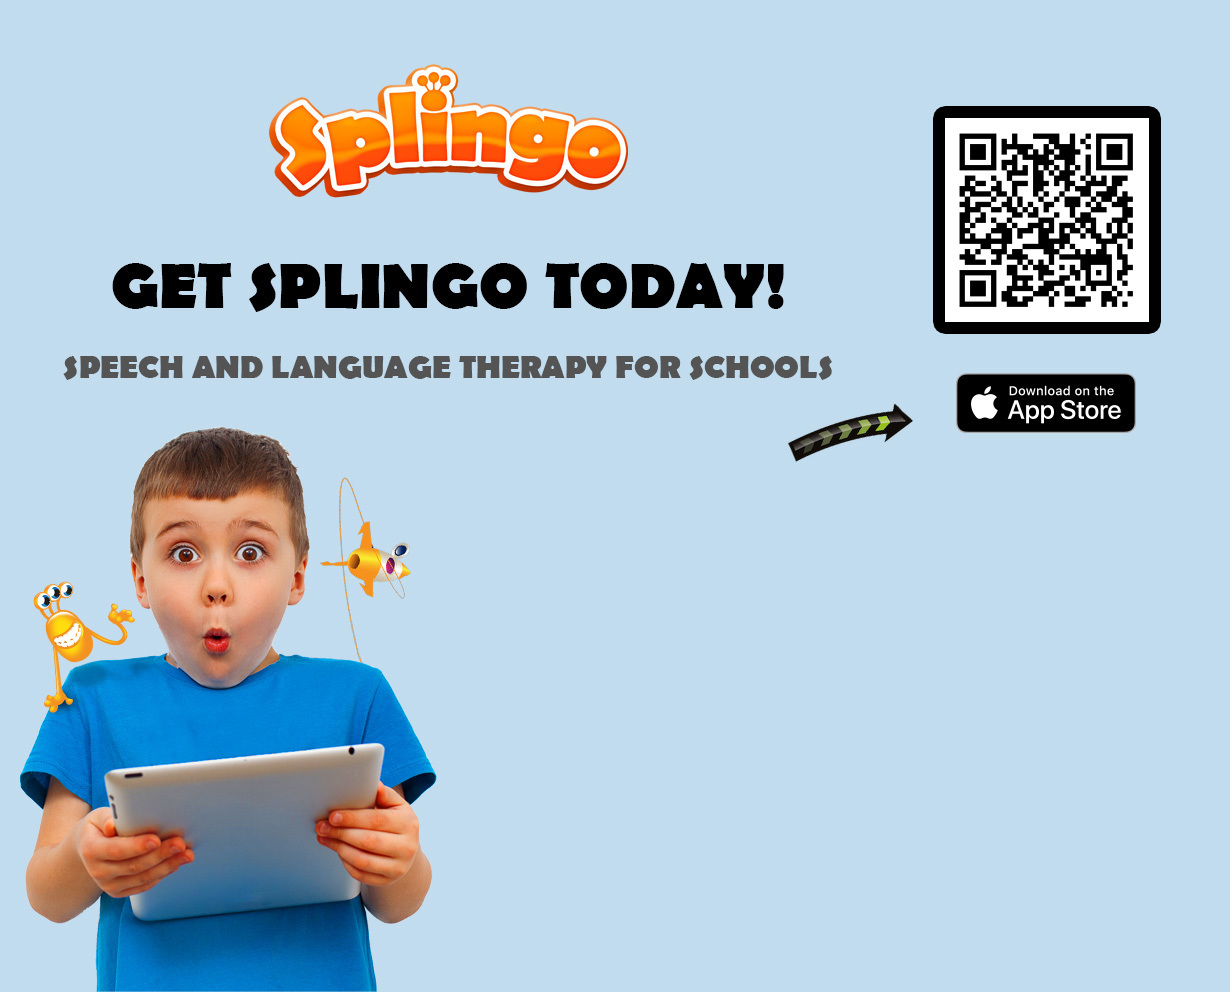 Splingo - Get Splingo Today - Speech and Language Therapy for Schools